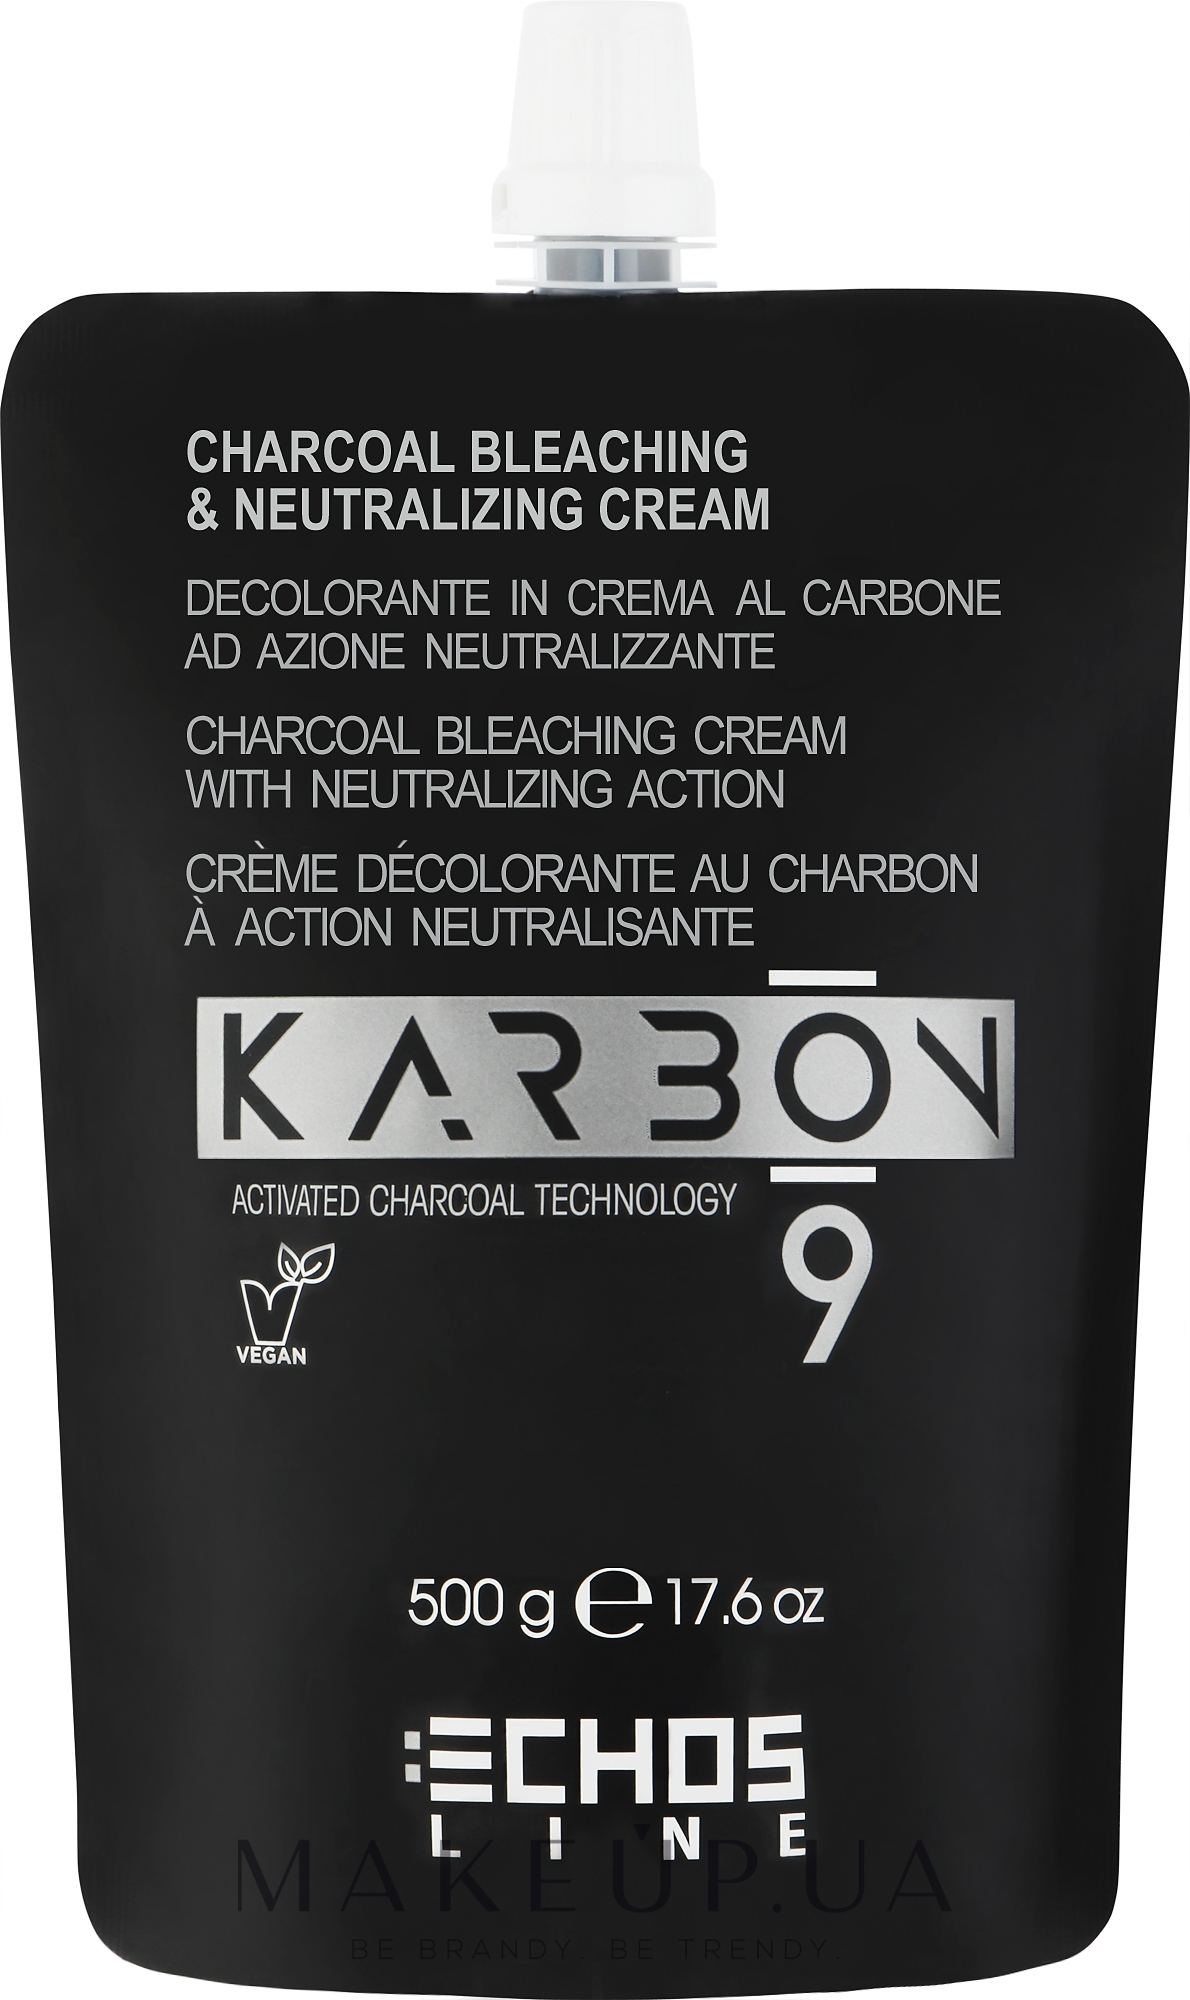 Осветляющий крем для волос с нейтрализатором - Echosline Karbon 9 Charcoal Bleaching & Neutralizing Cream — фото 500g